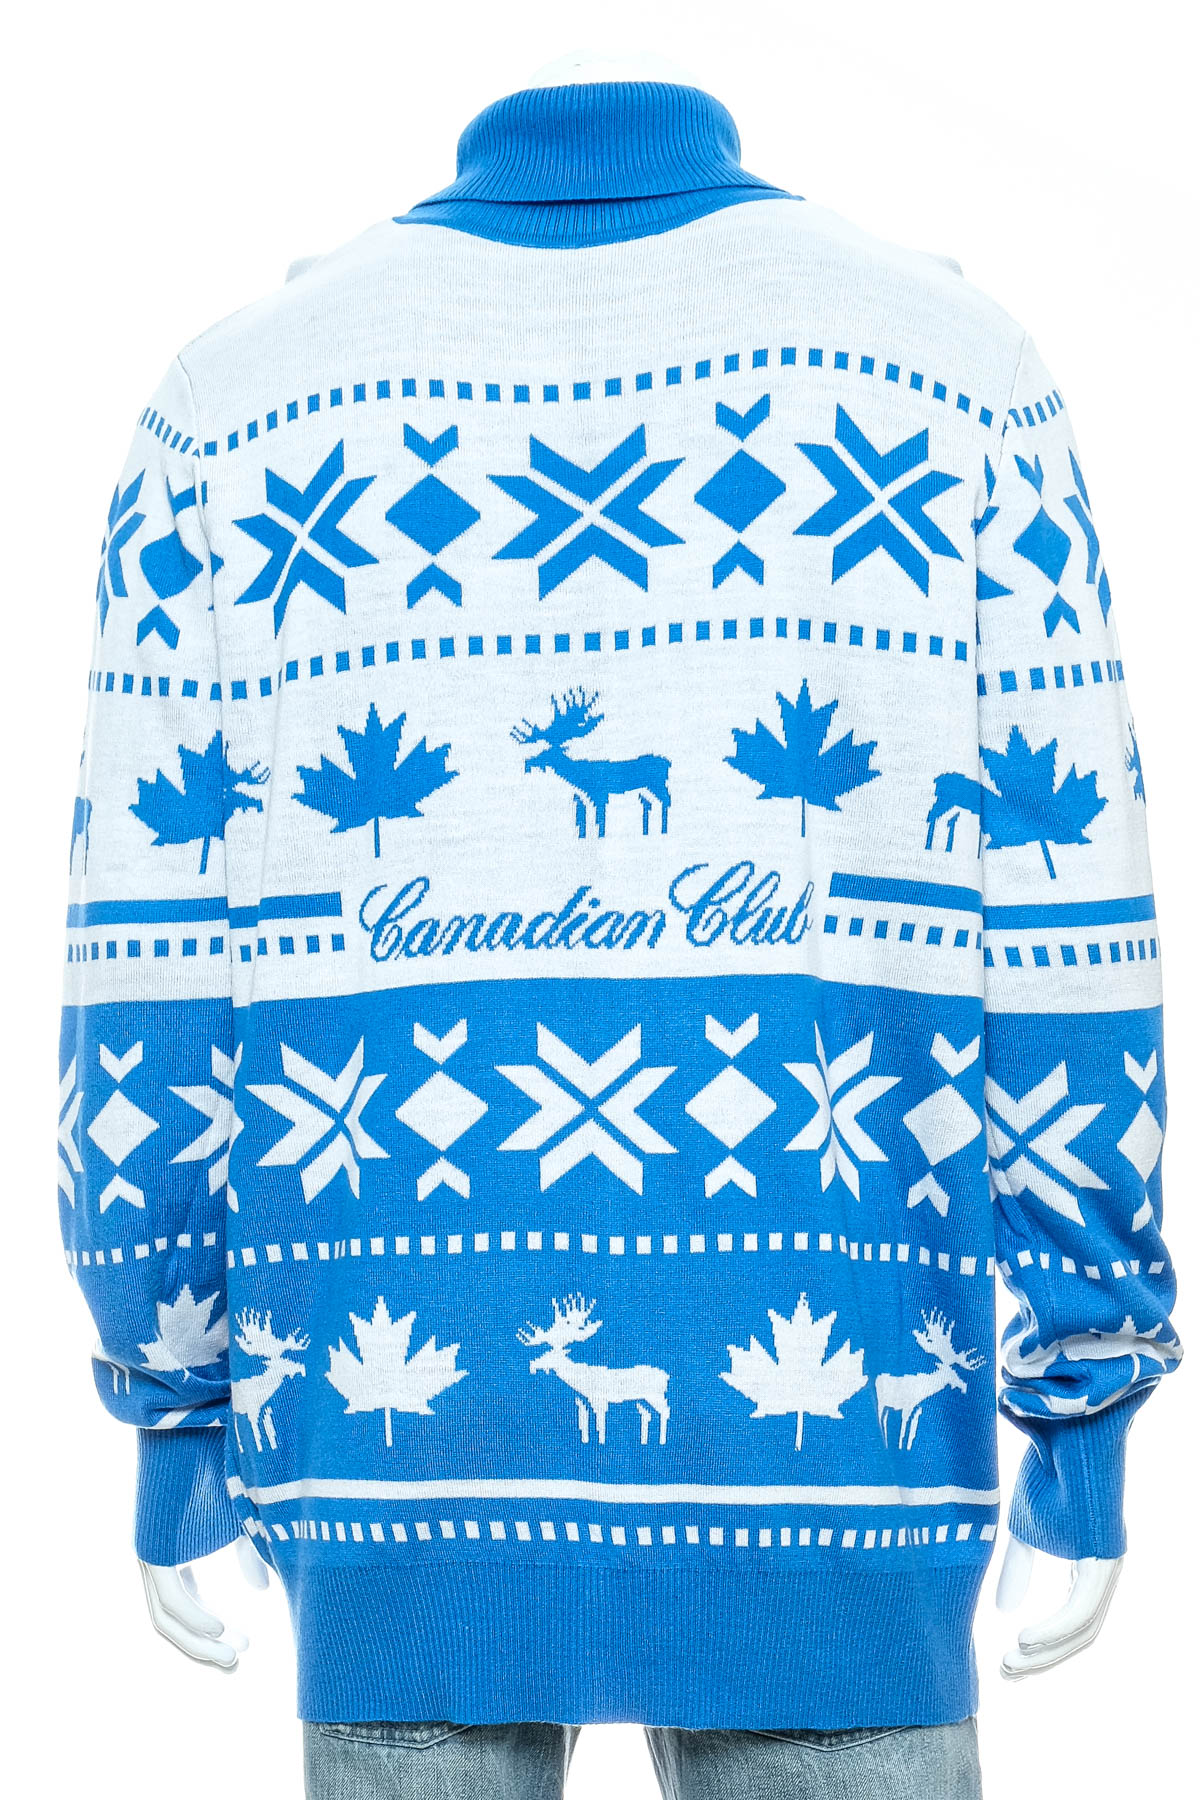 Men's sweater - Canadian Club - 1